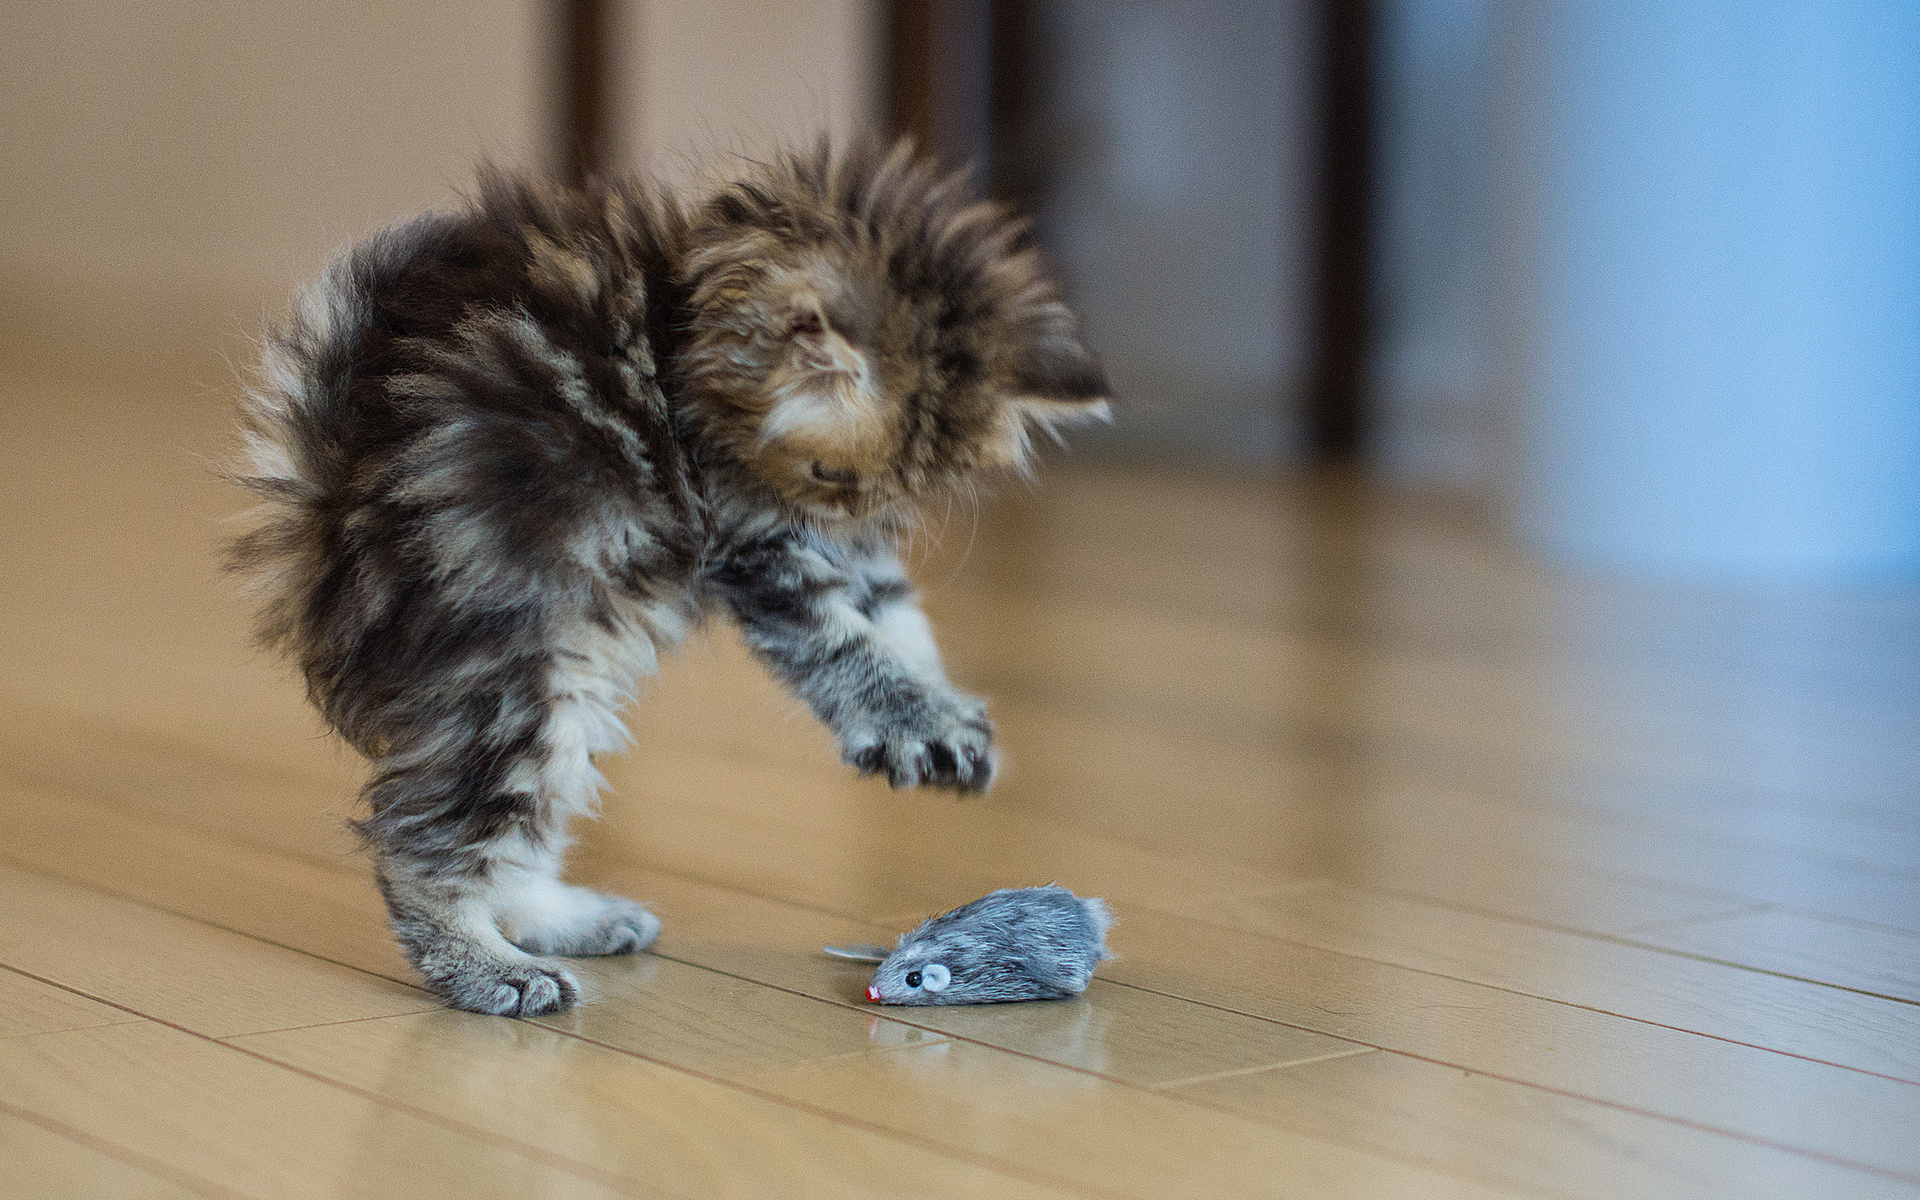 Animals Cats Kitten Babies Cute Play Mouse Mice Wallpaper